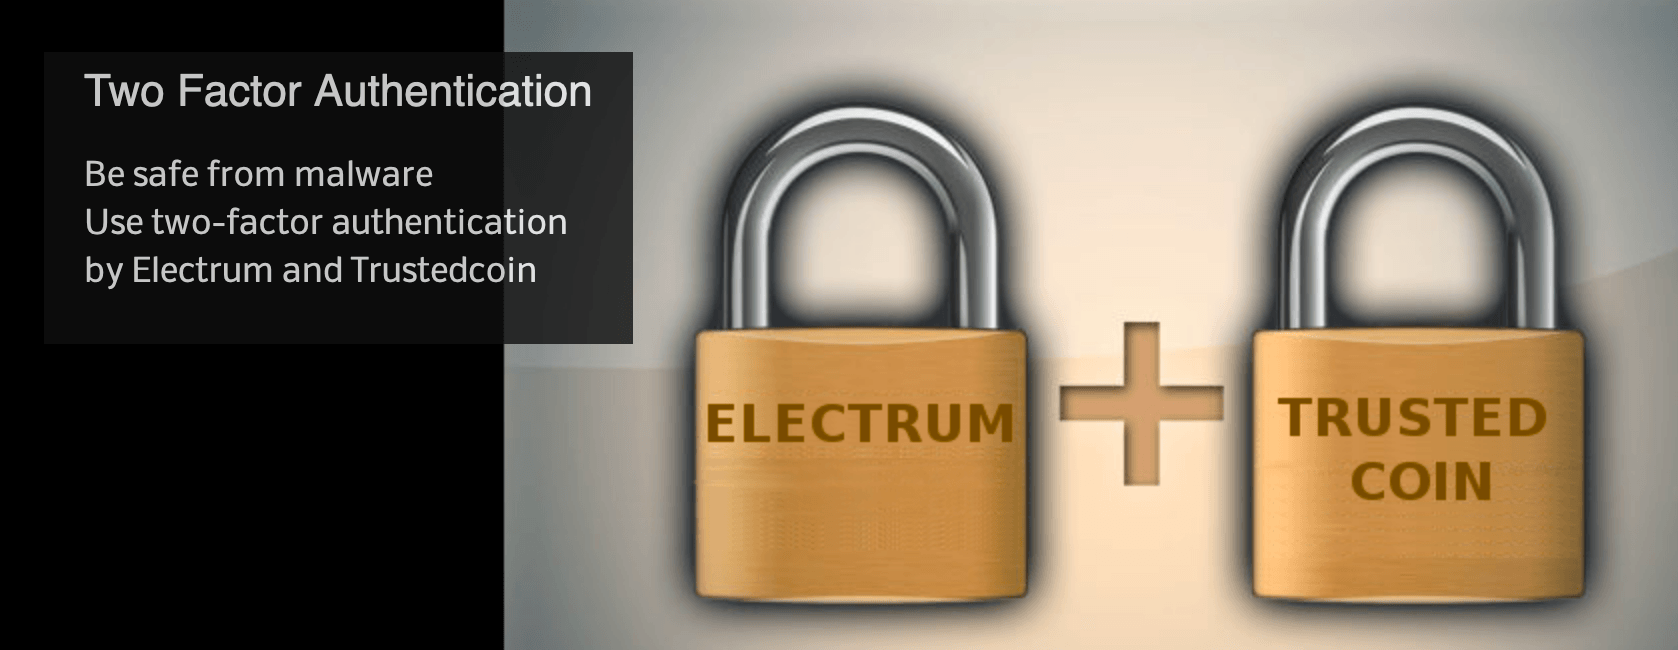 electrum wallet two factor authentication